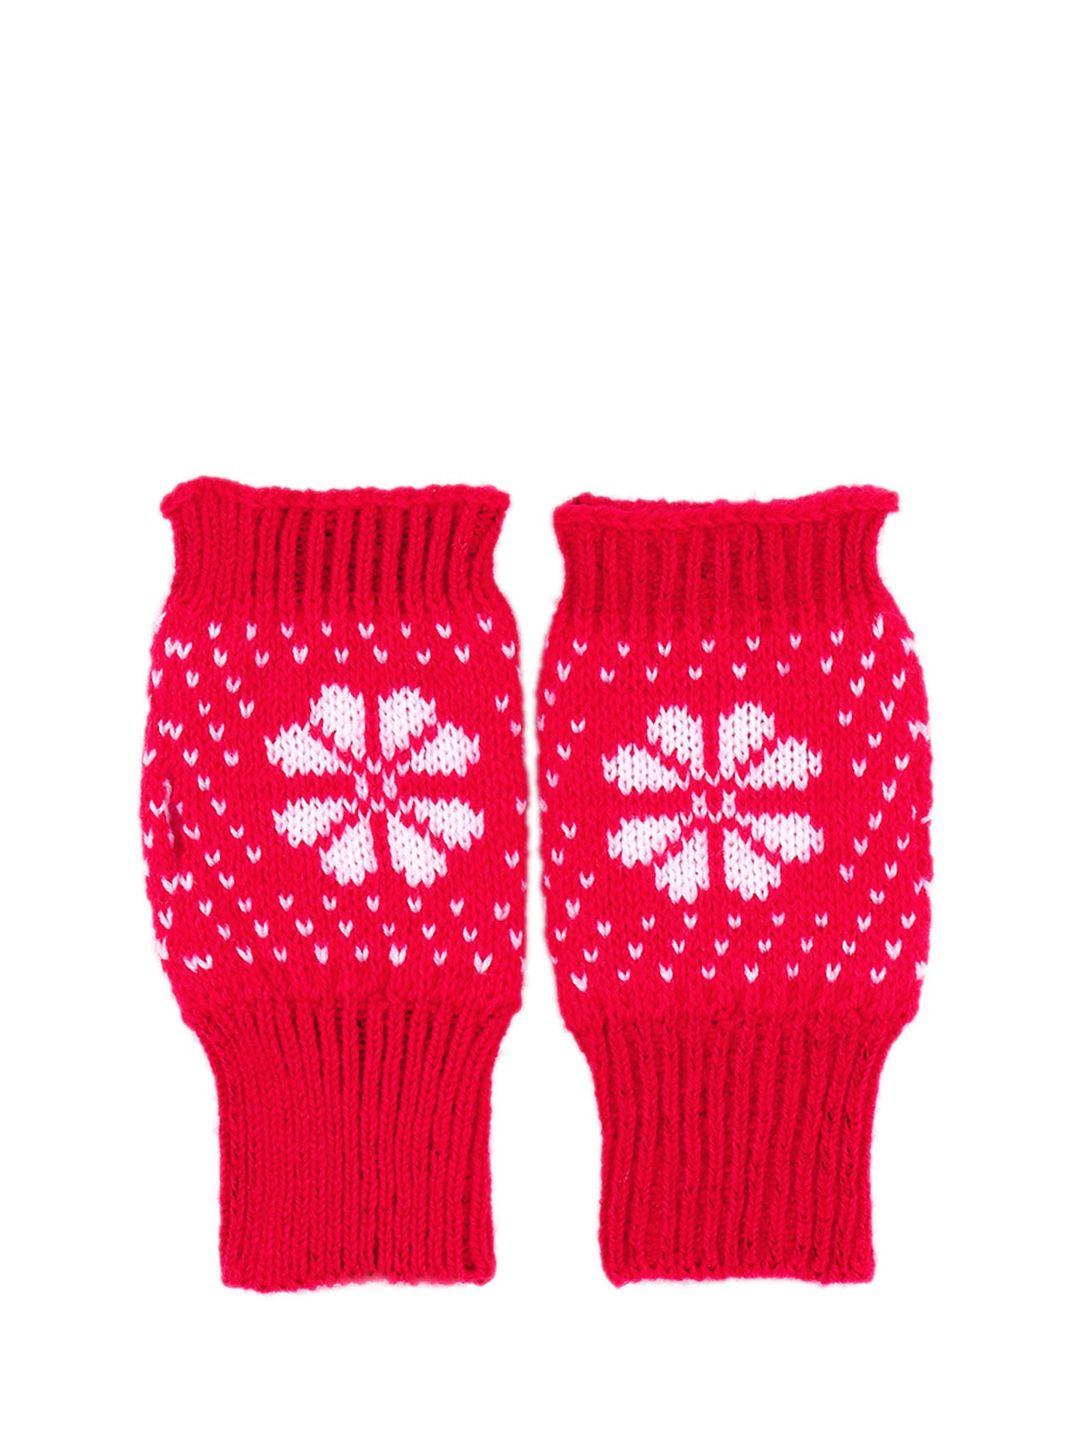 bharatasya kids red knitted christmas acrylic winter gloves